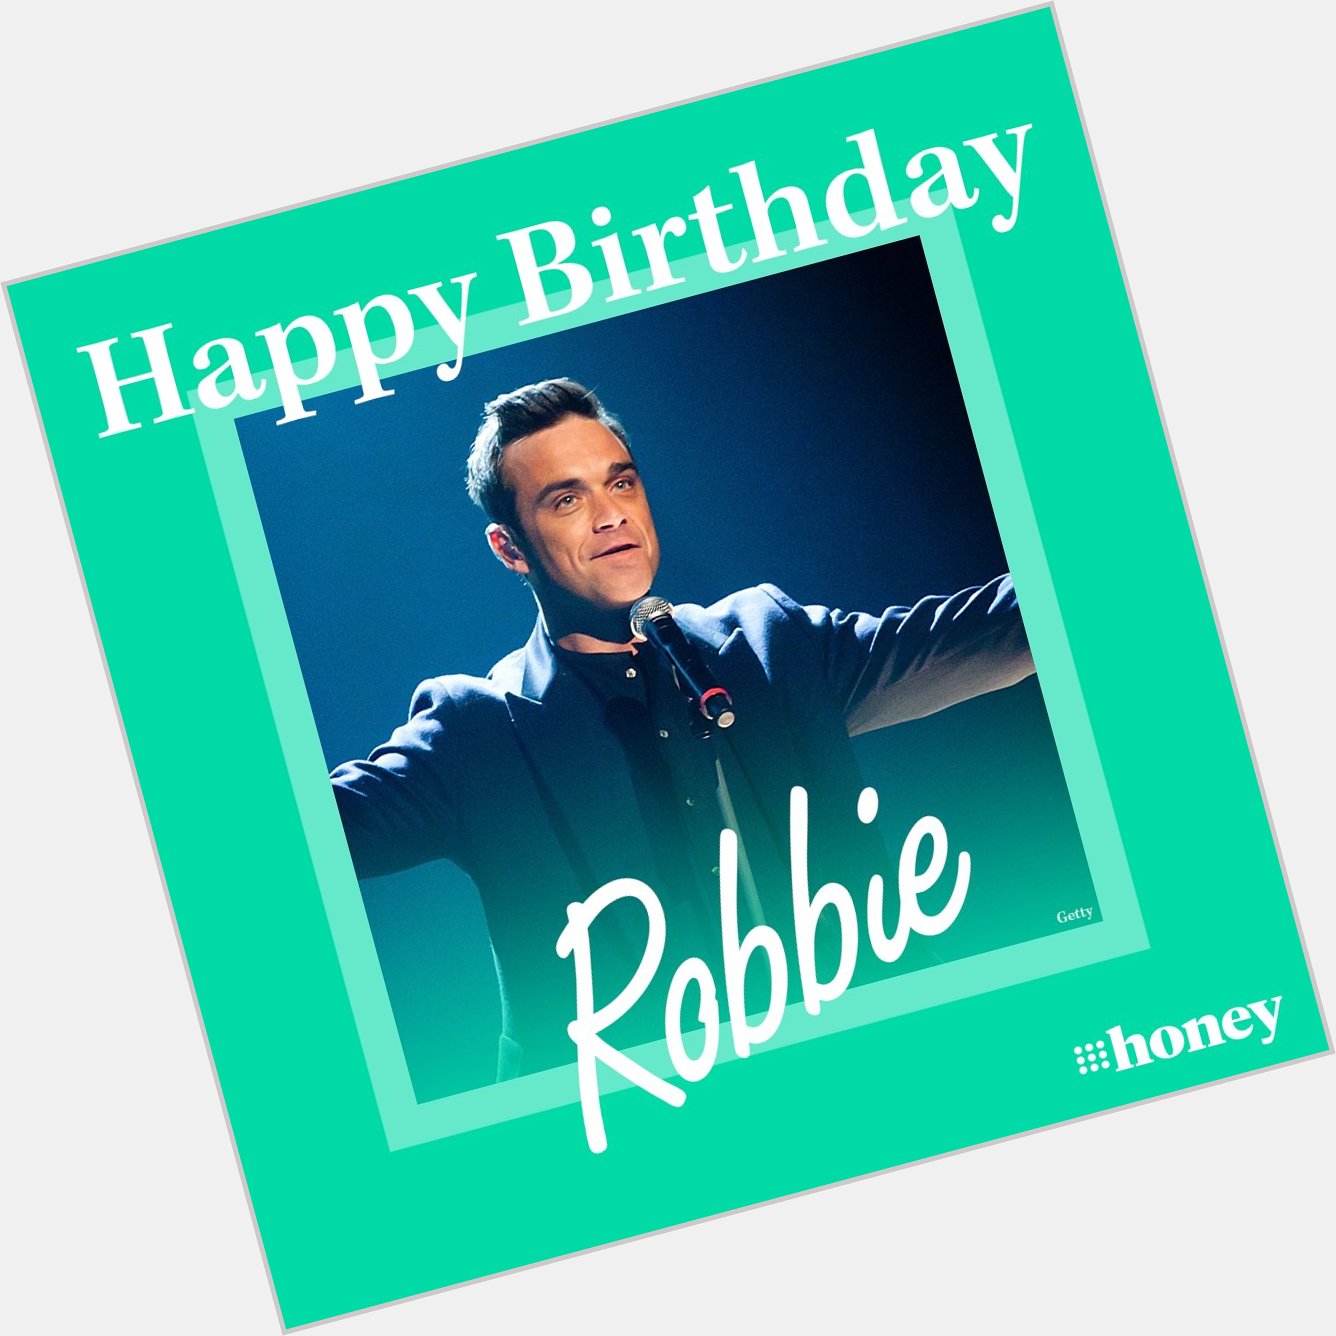 Happy Birthday to the cheeky showman Robbie Williams! 